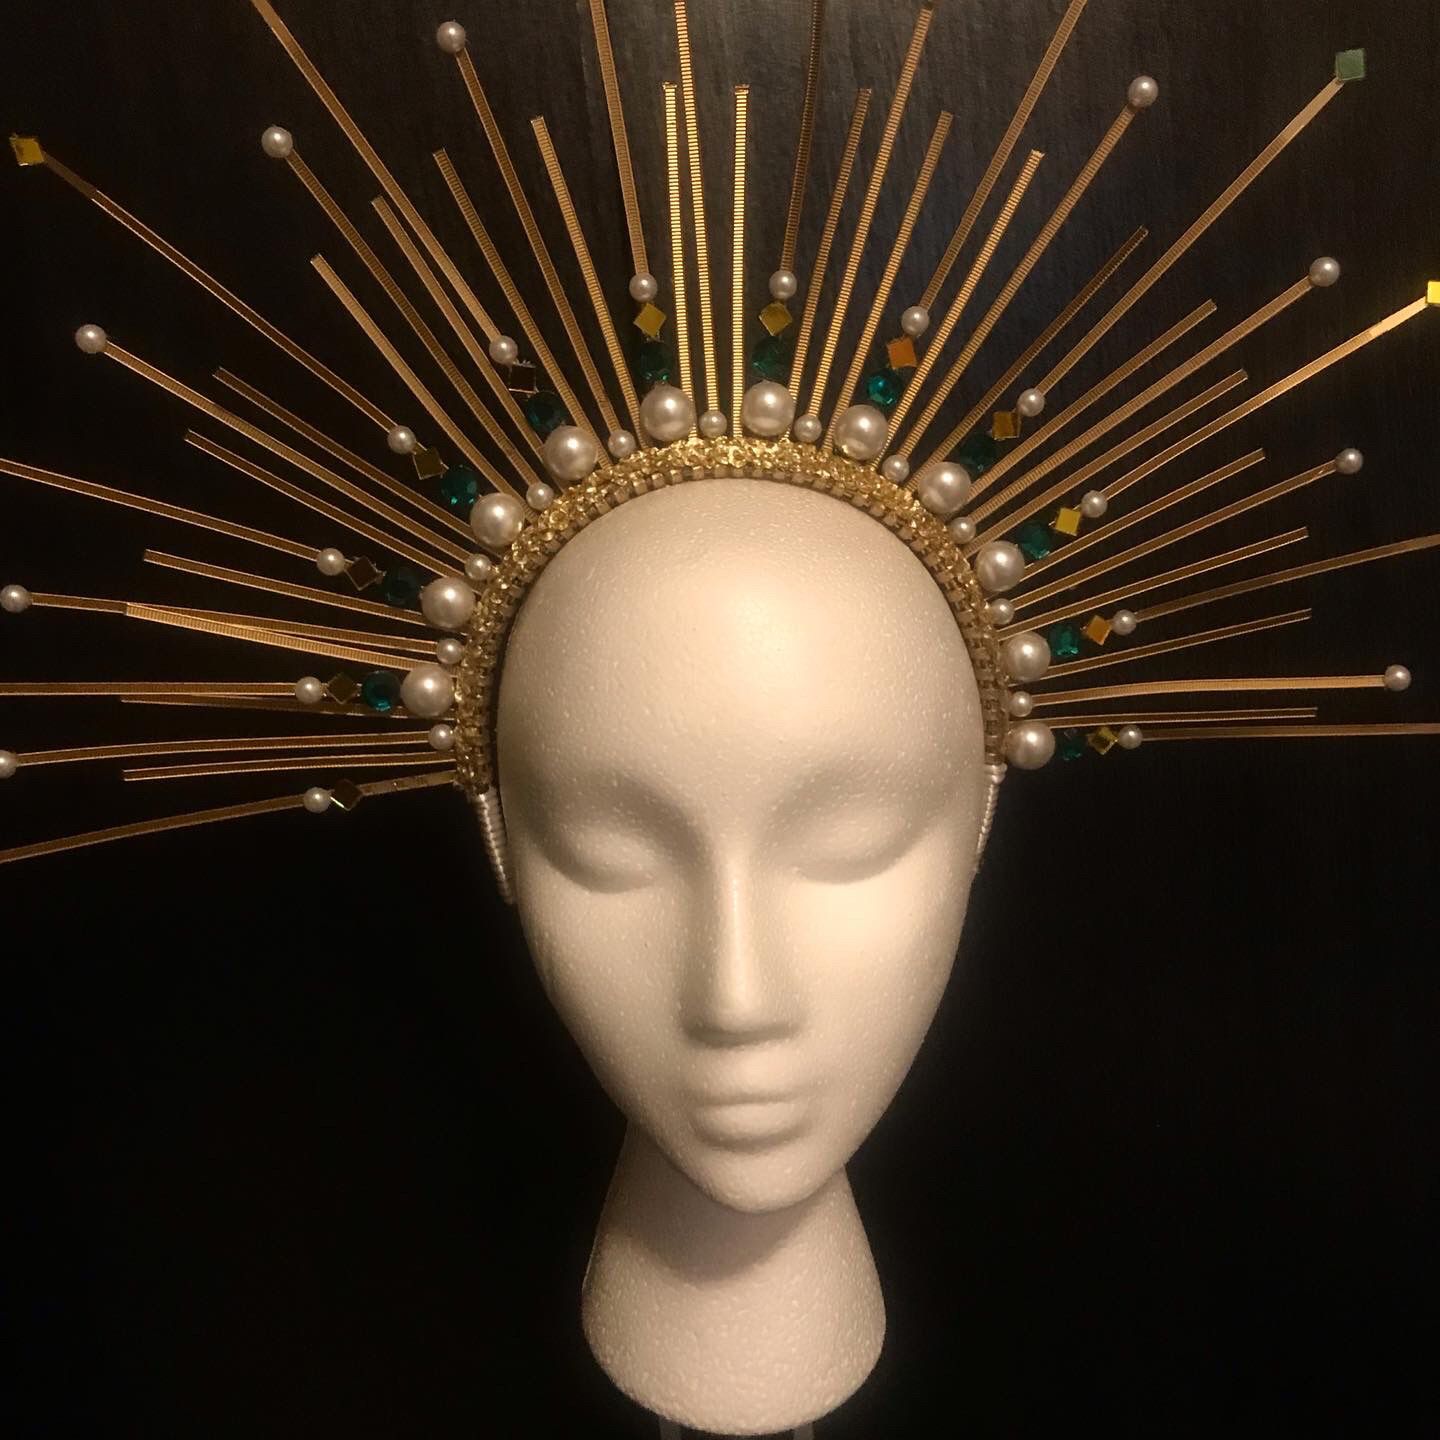 Golden Halo/Rays Of Light Crown/Headpiece/Tiara